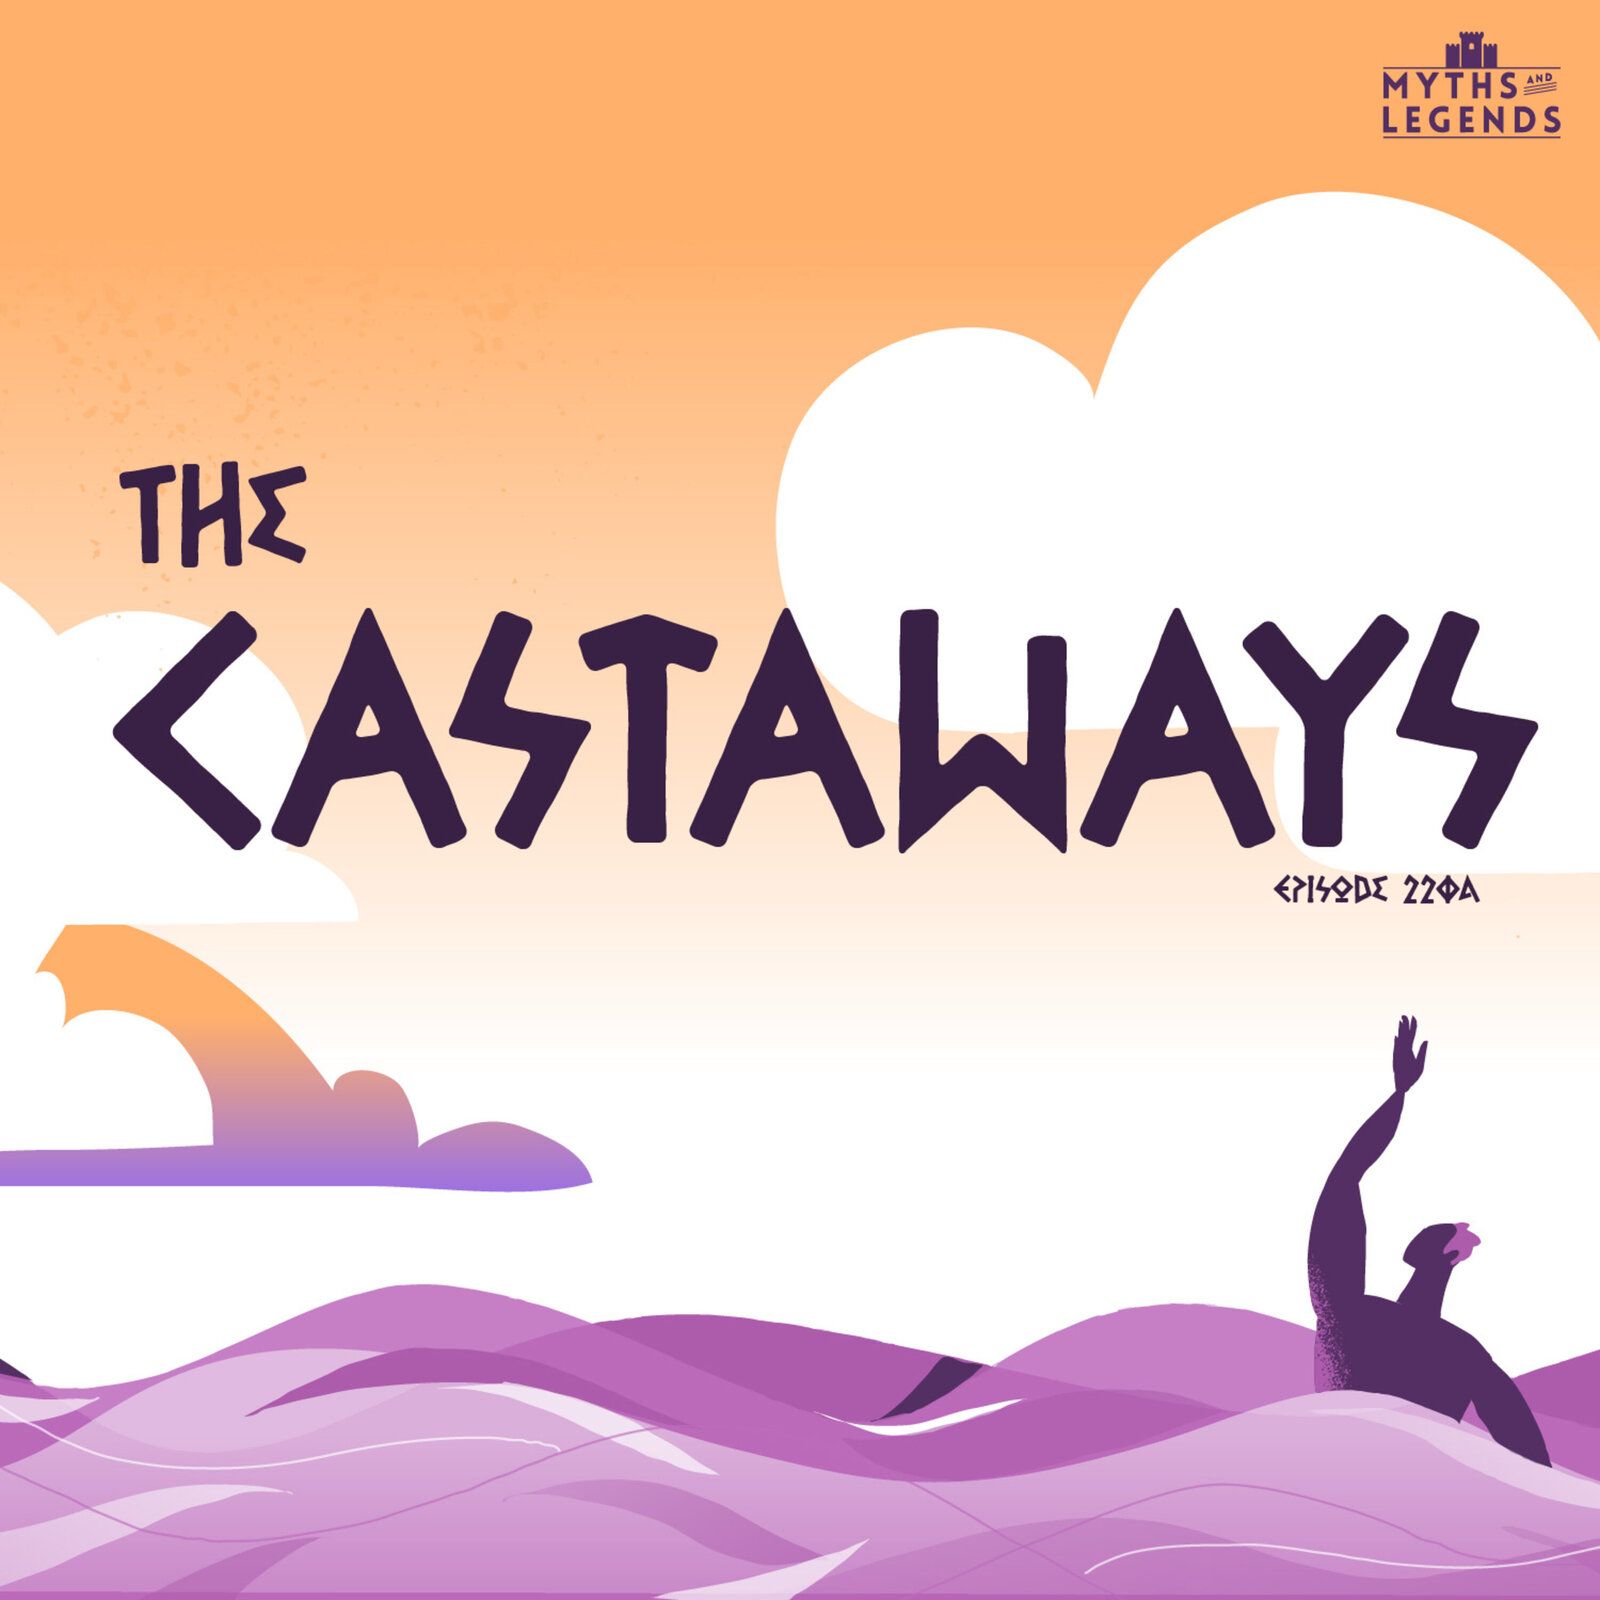 220A-Odyssey: The Castaways